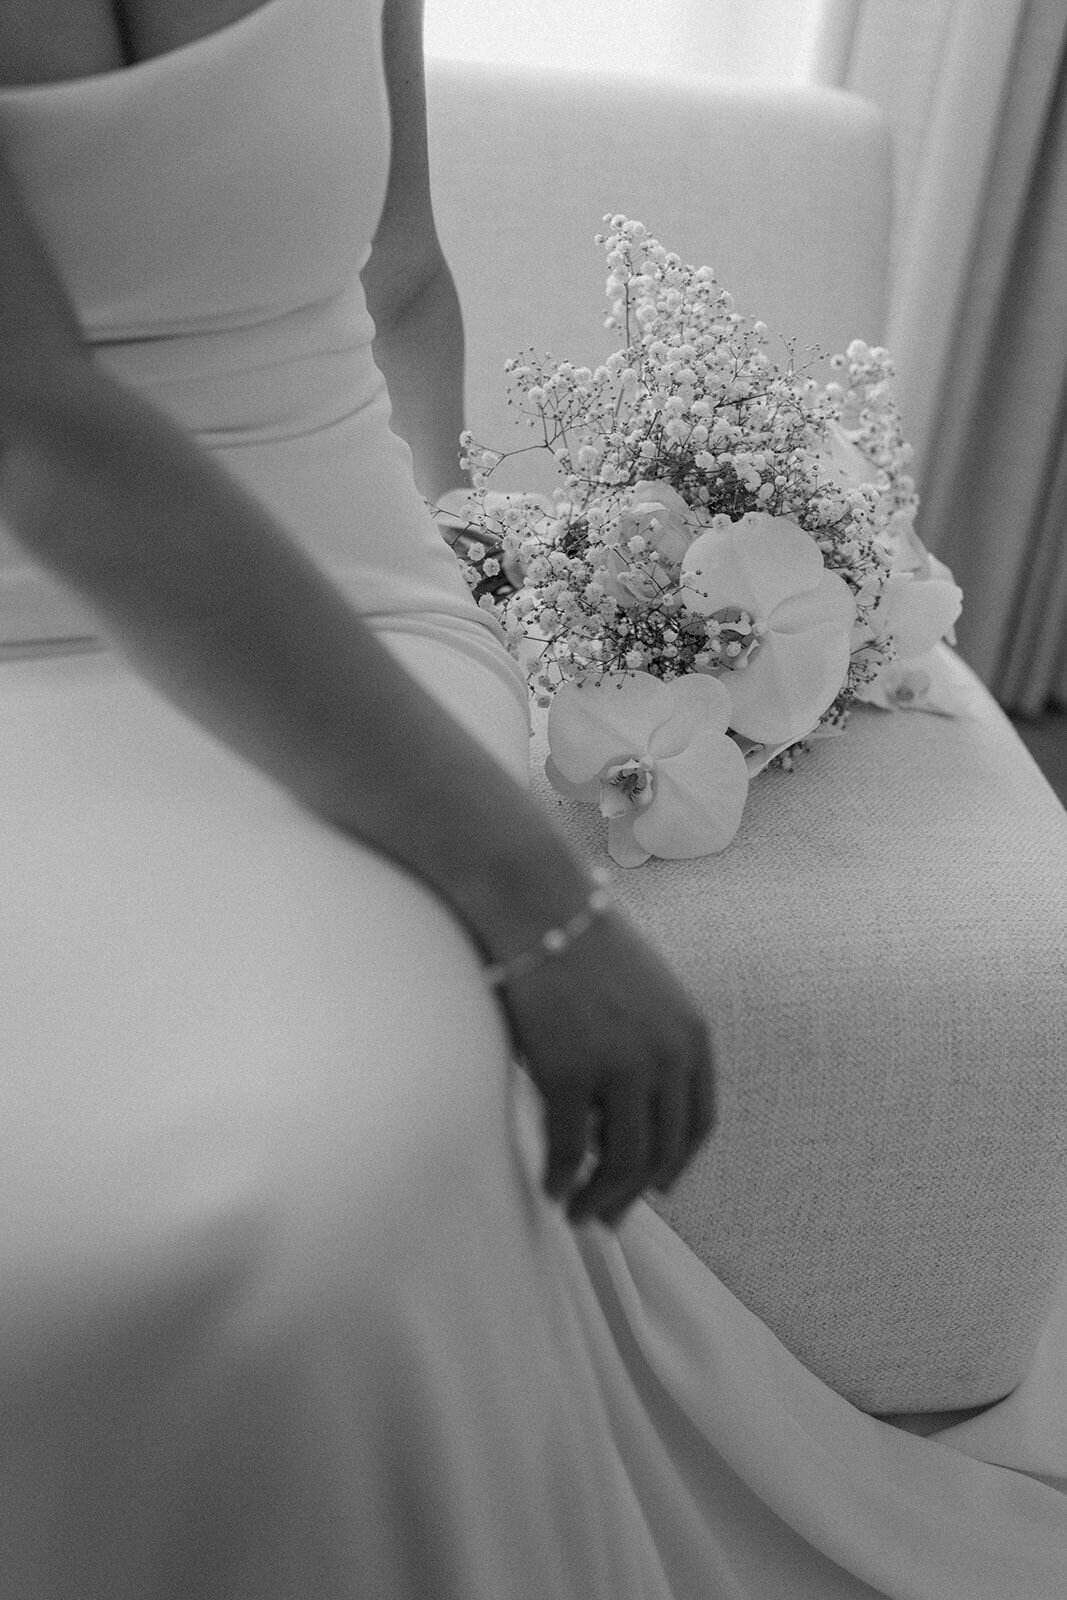 Stunning bridal detail, captured by Nikki Collette, featured on the Brontë Bride Wedding Vendor Guide.